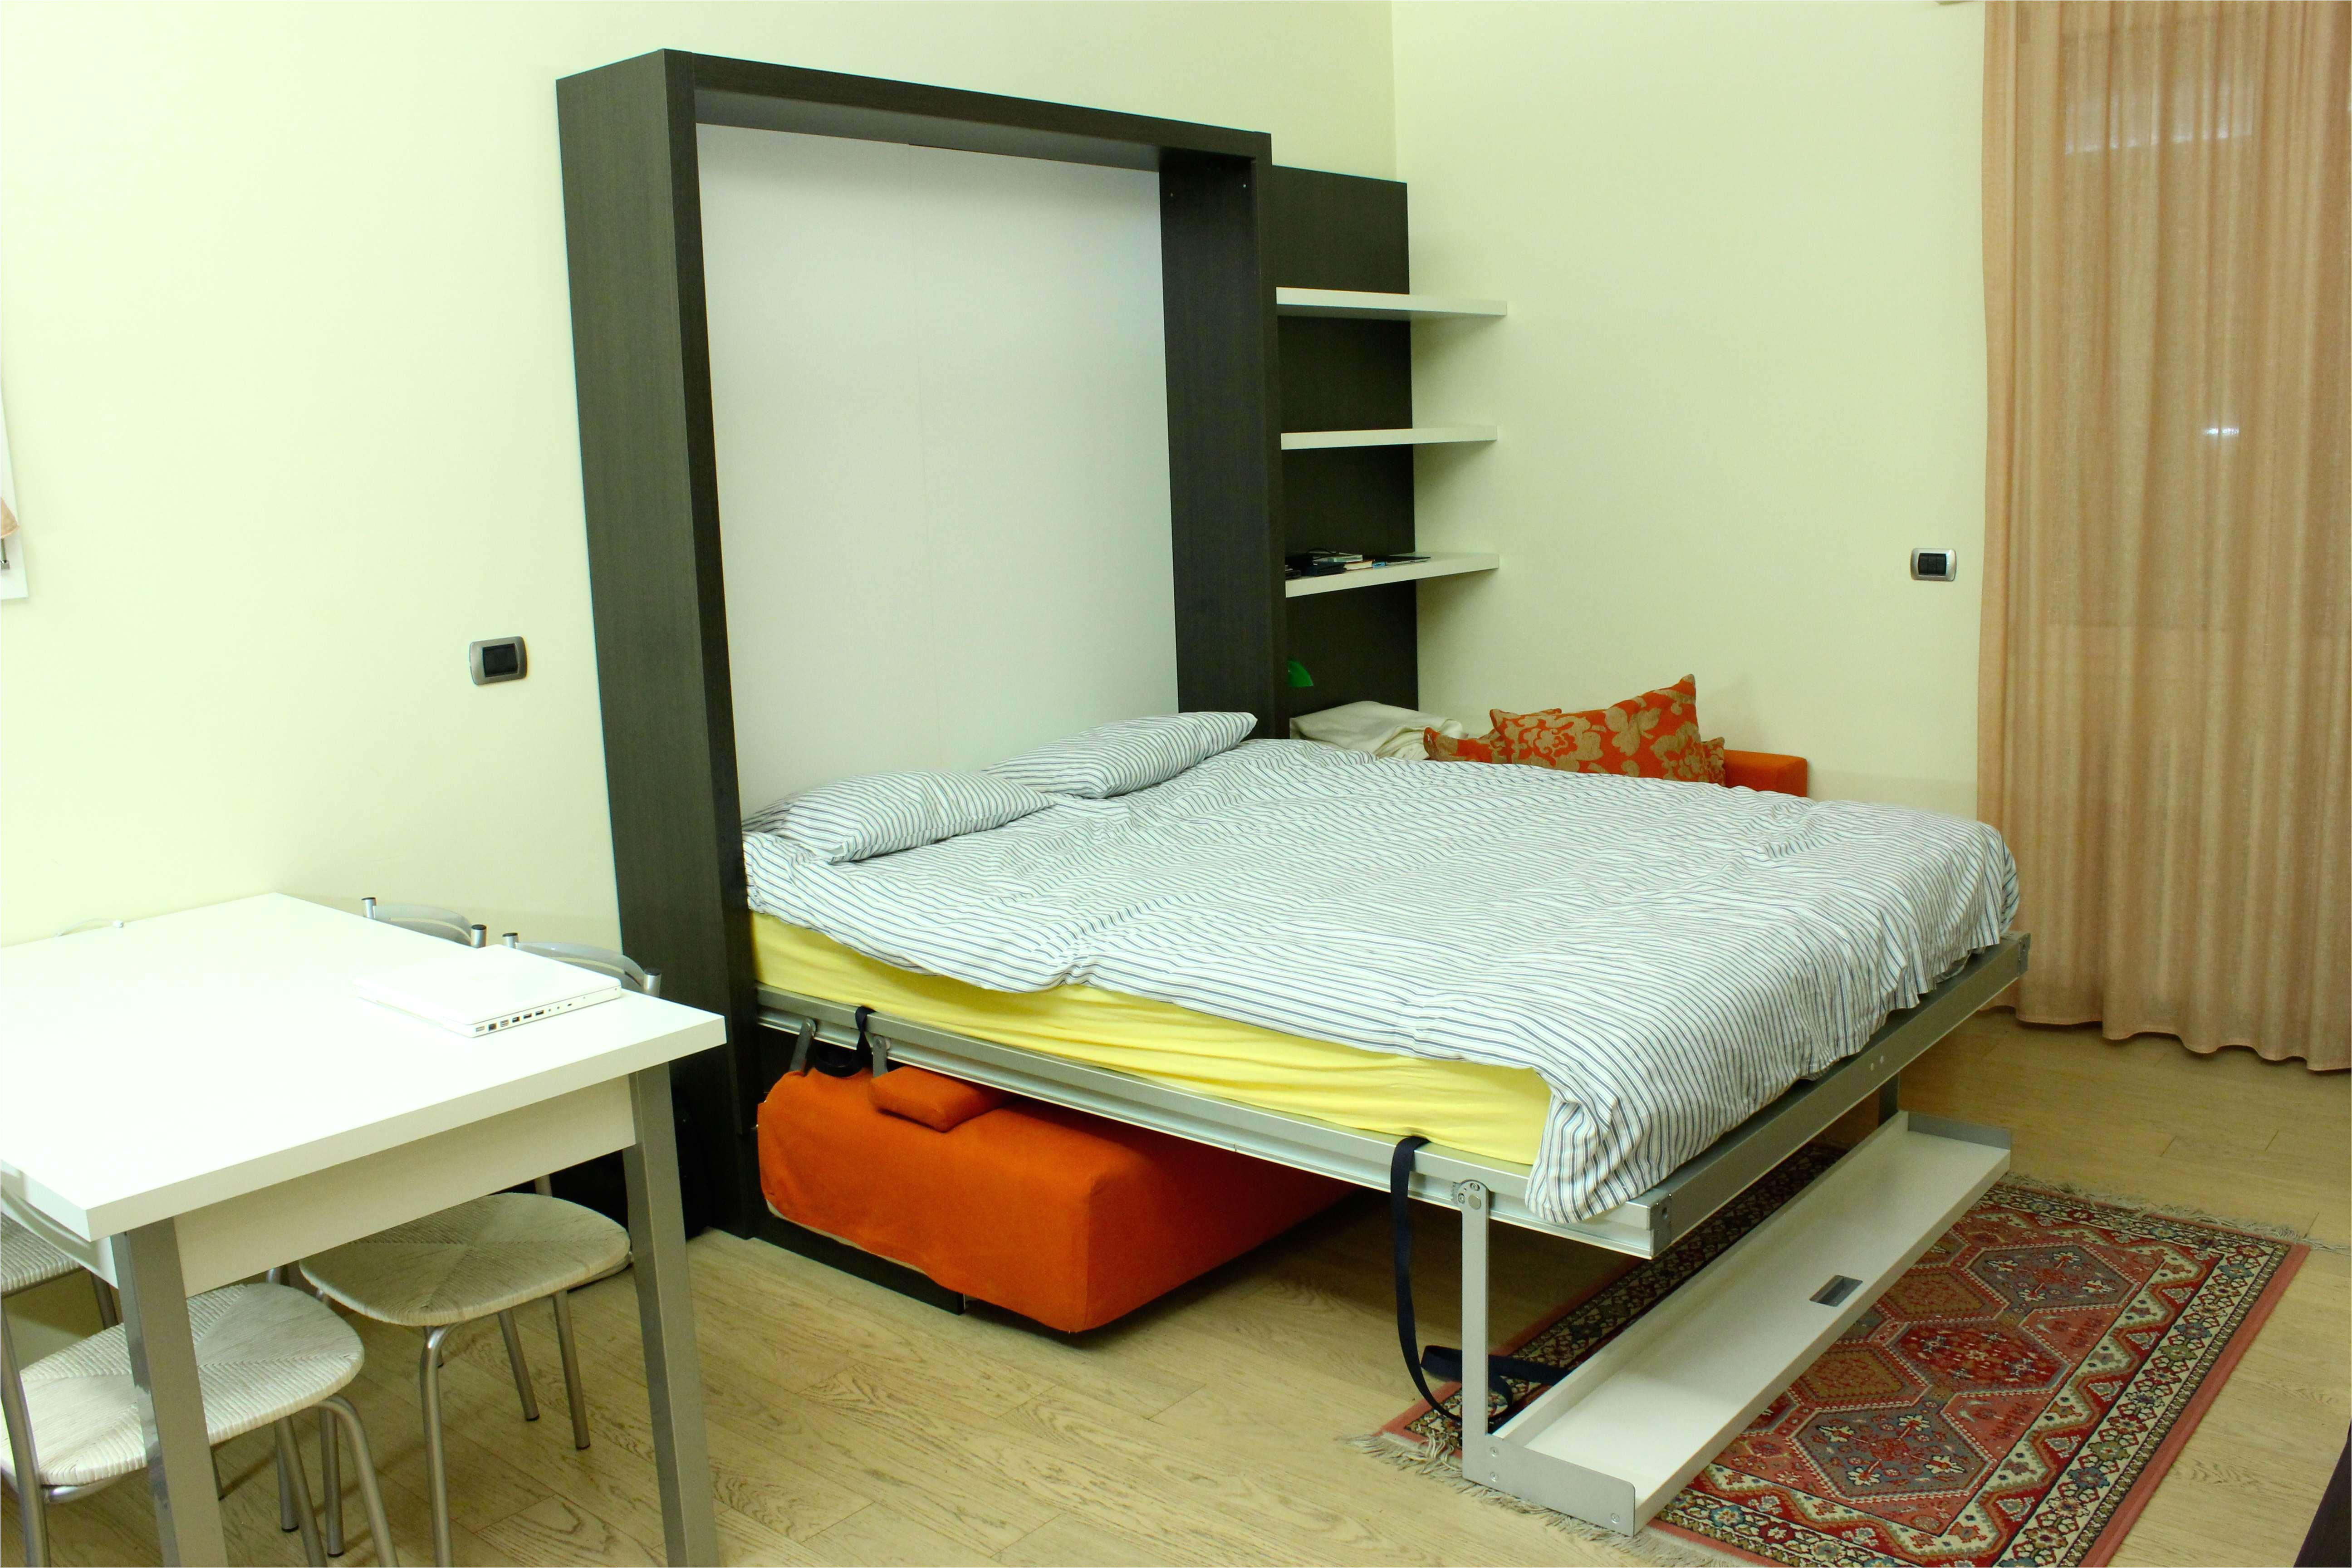 bedroom design great inspirations gallery murphy ikea for home office maple twin frame mattresses metal queen